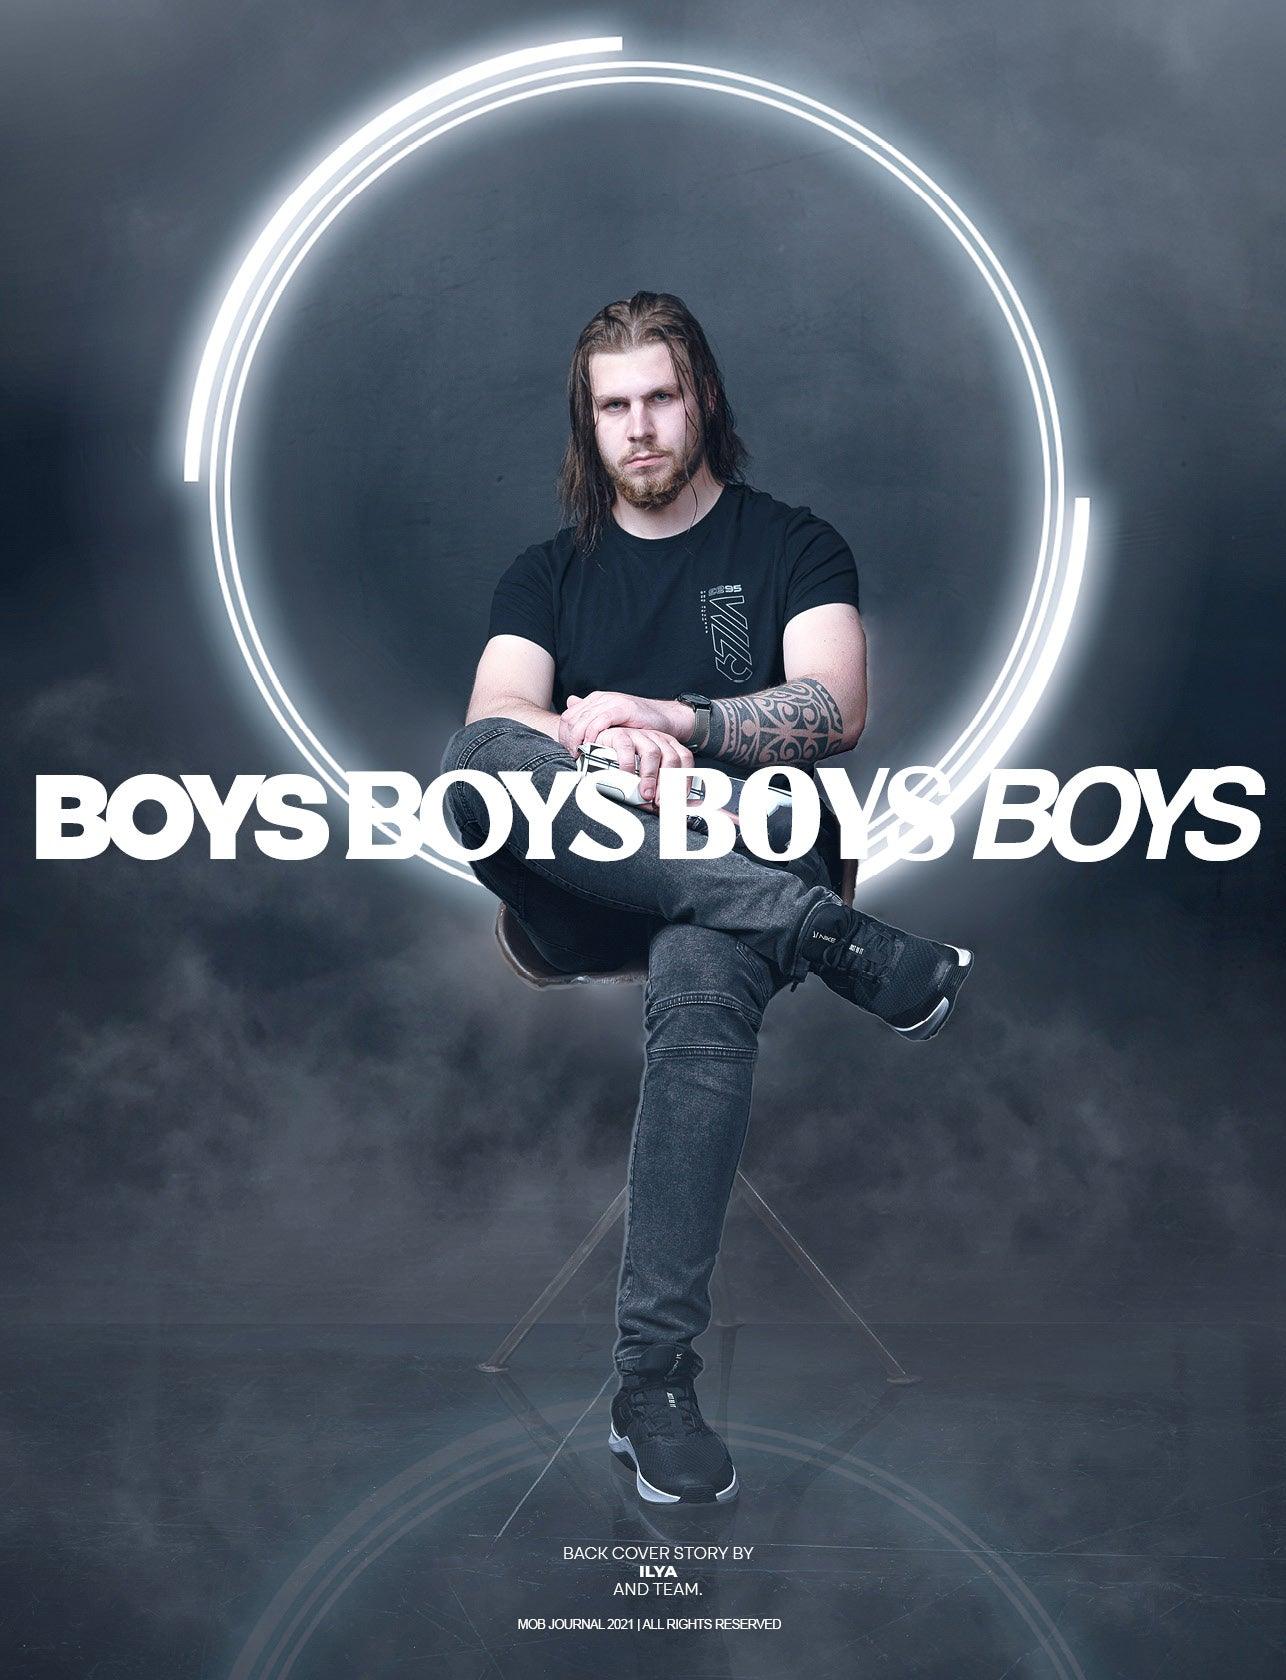 BOYS BOYS BOYS BOYS | VOLUME TEN | ISSUE #26 - Mob Journal